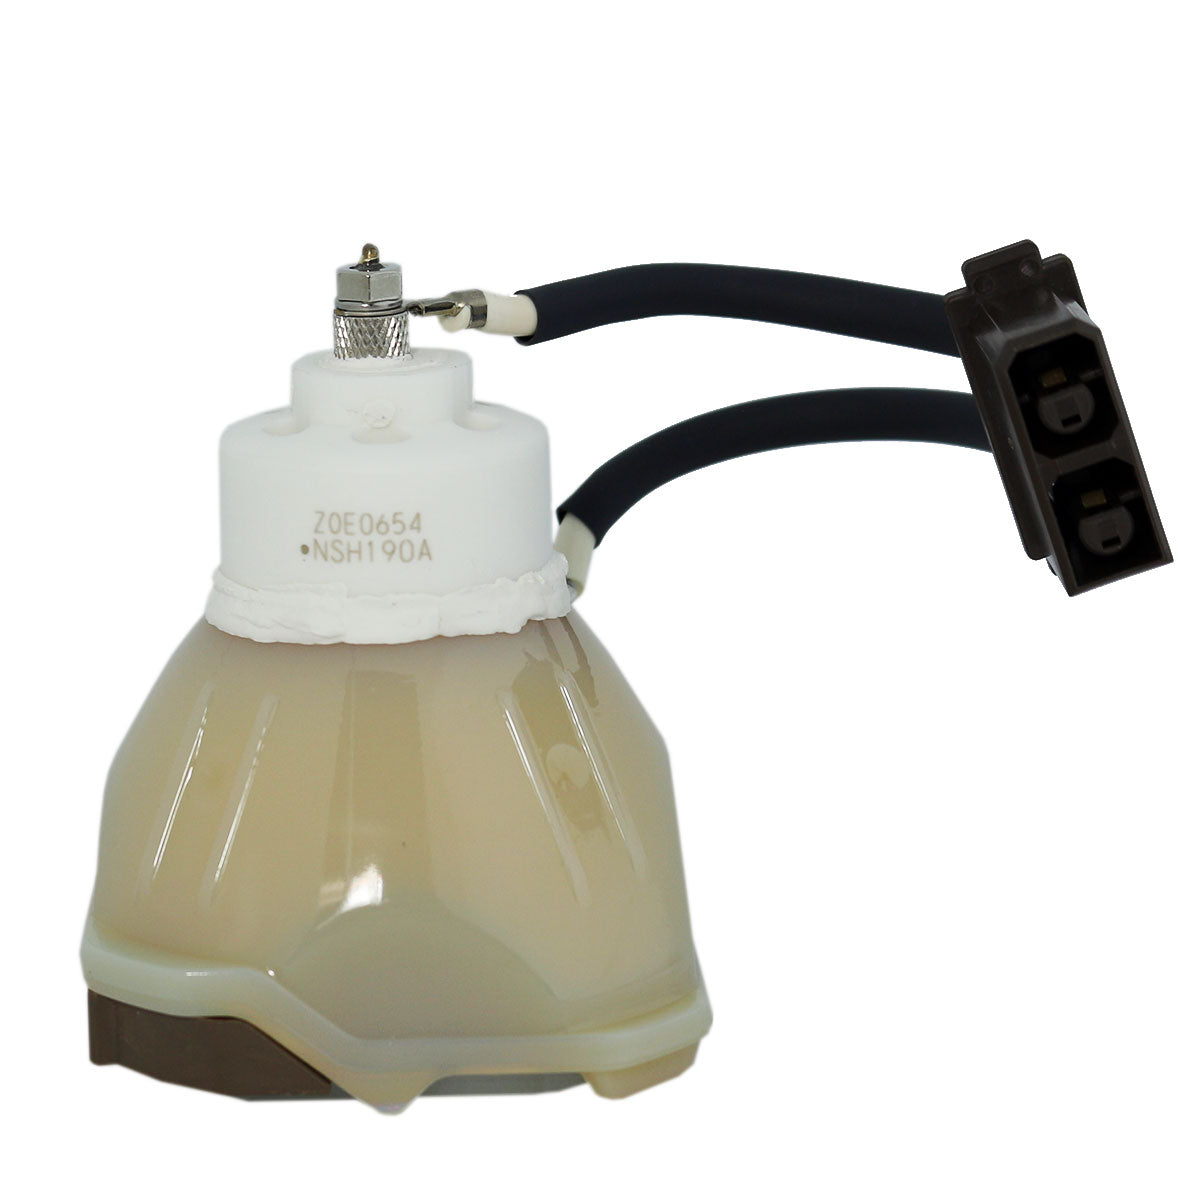 Dukane 456-206 Ushio Projector Bare Lamp